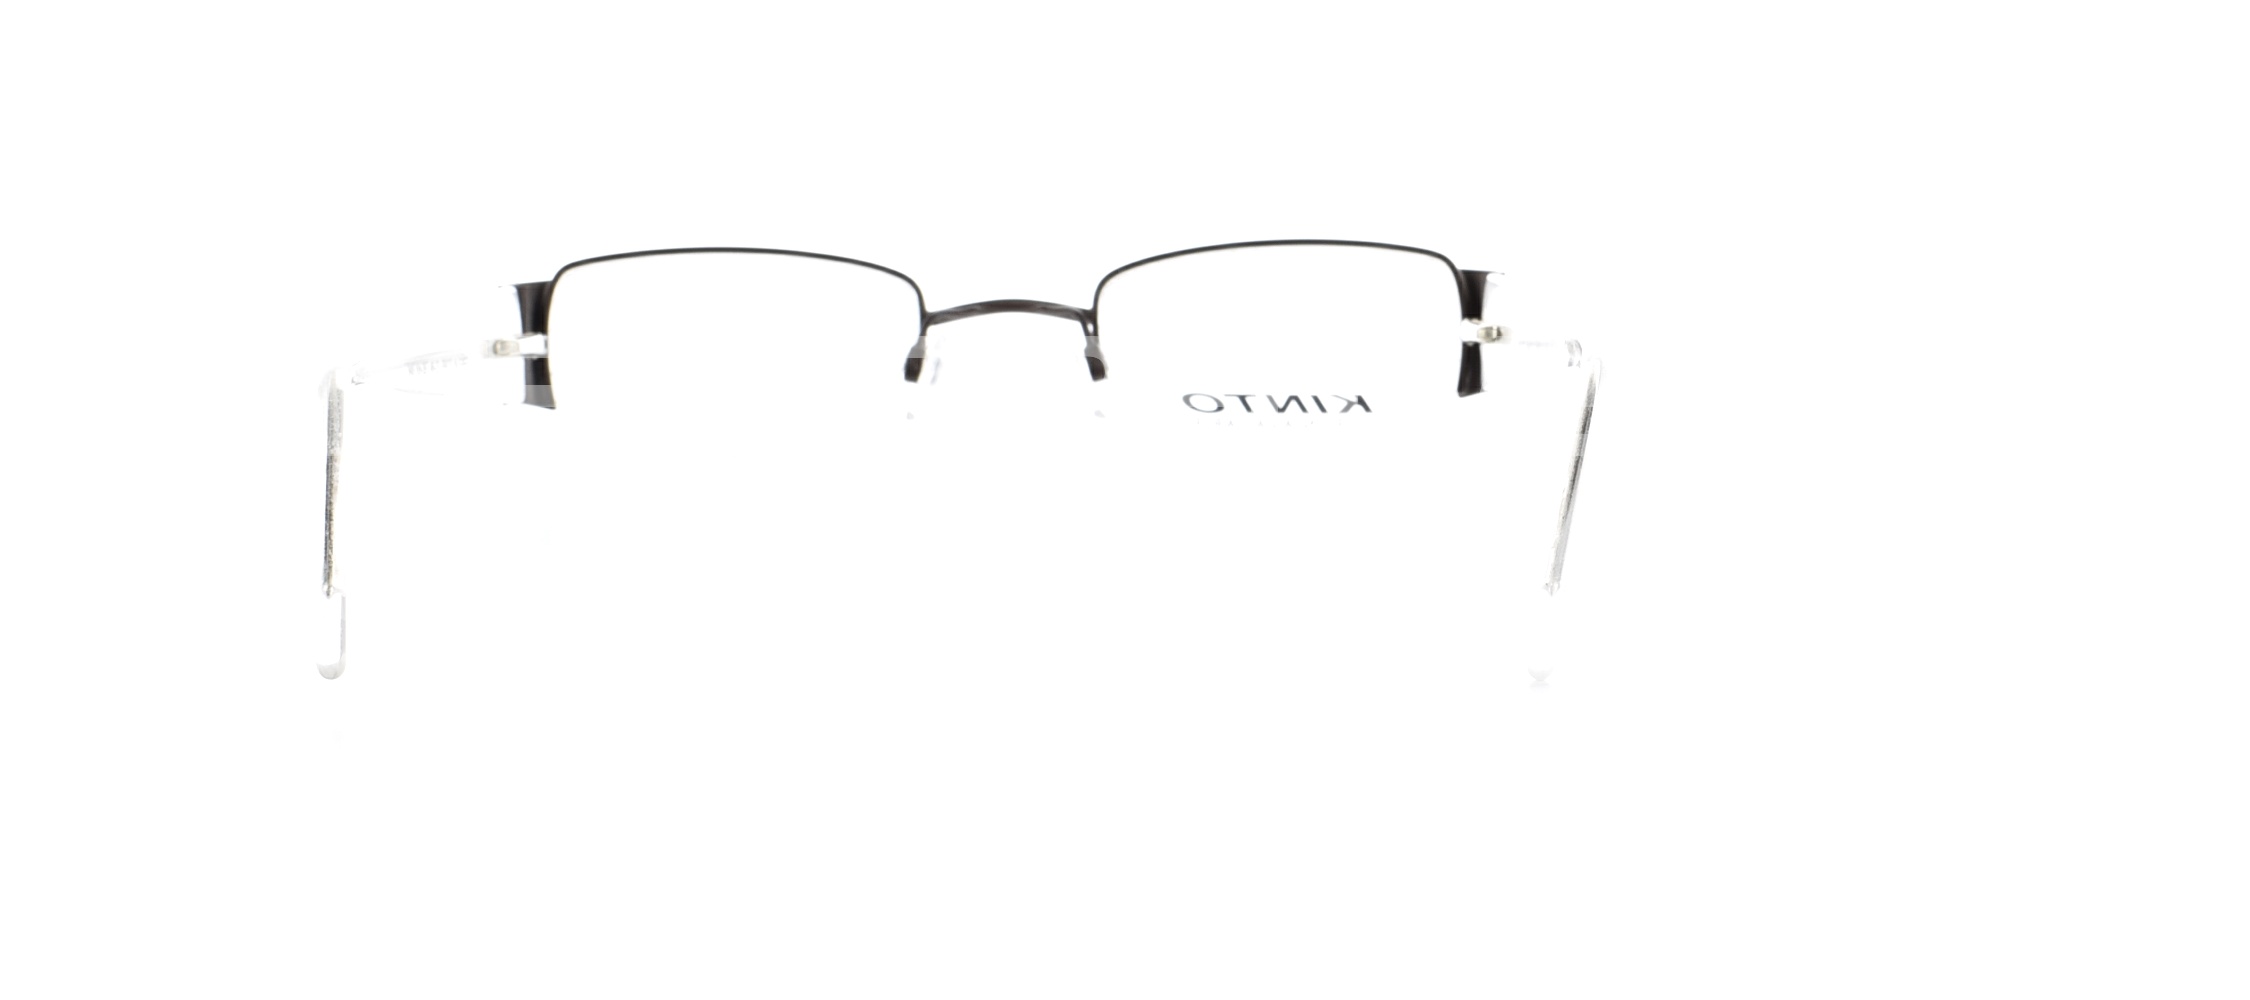 Rama ochelari vedere Kinto